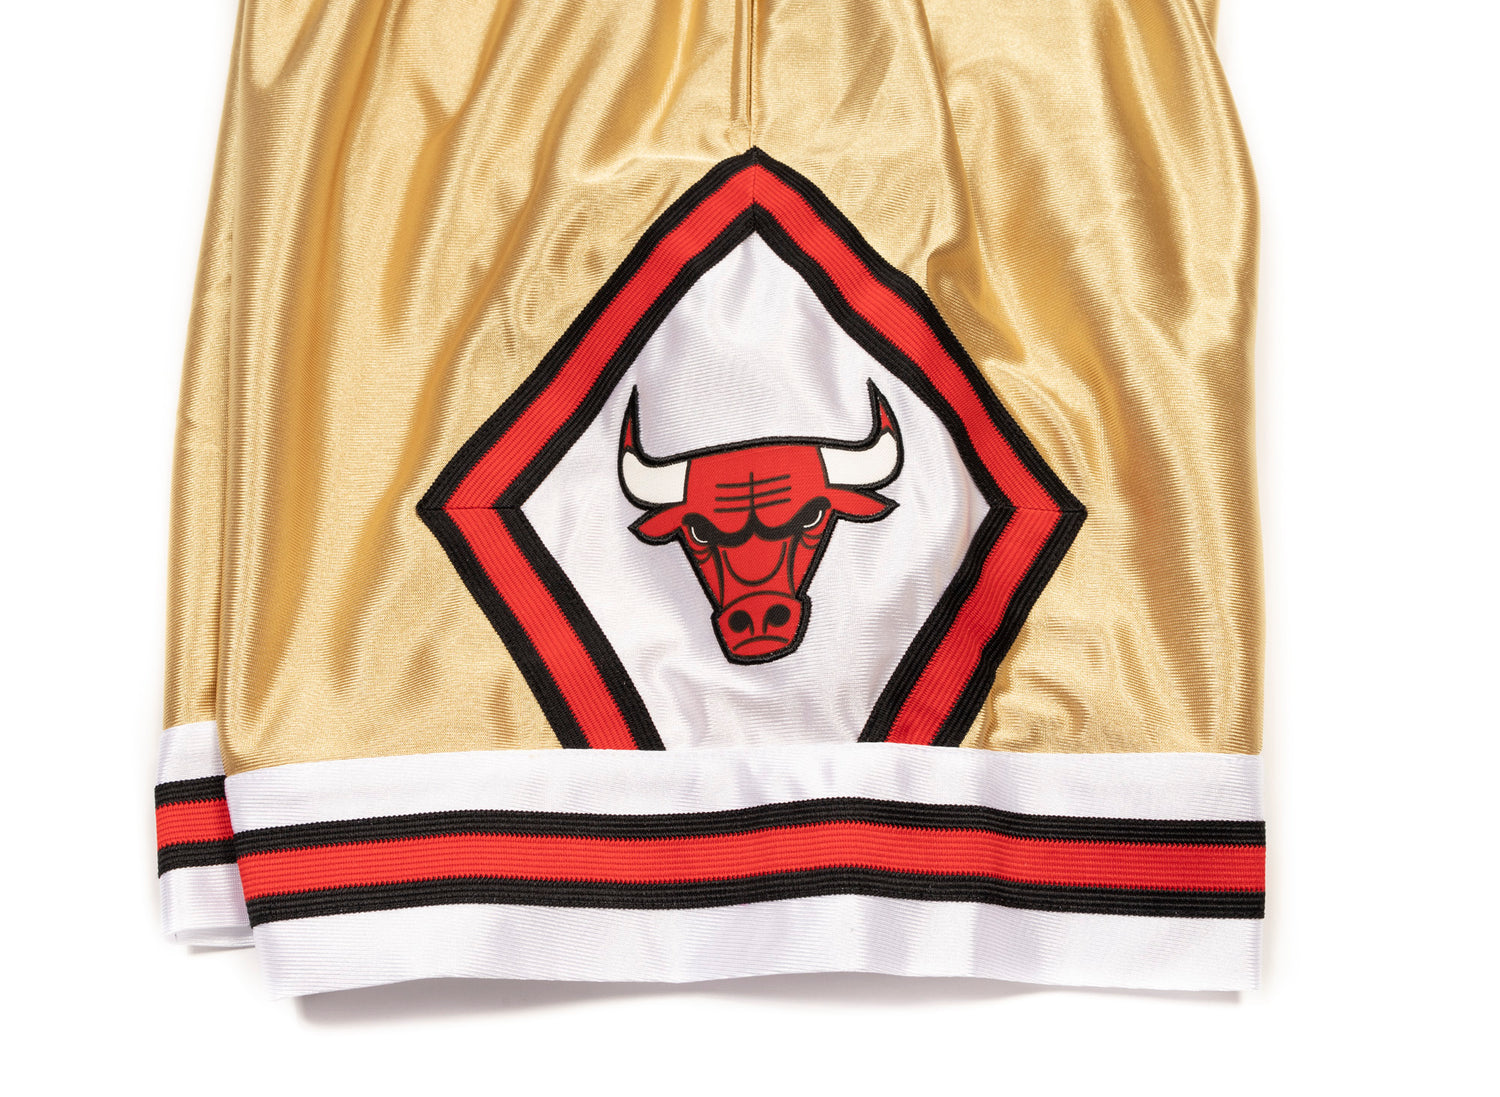 Mitchell & Ness Men's Chicago Bulls Gold Collection Swingman Shorts - Macy's